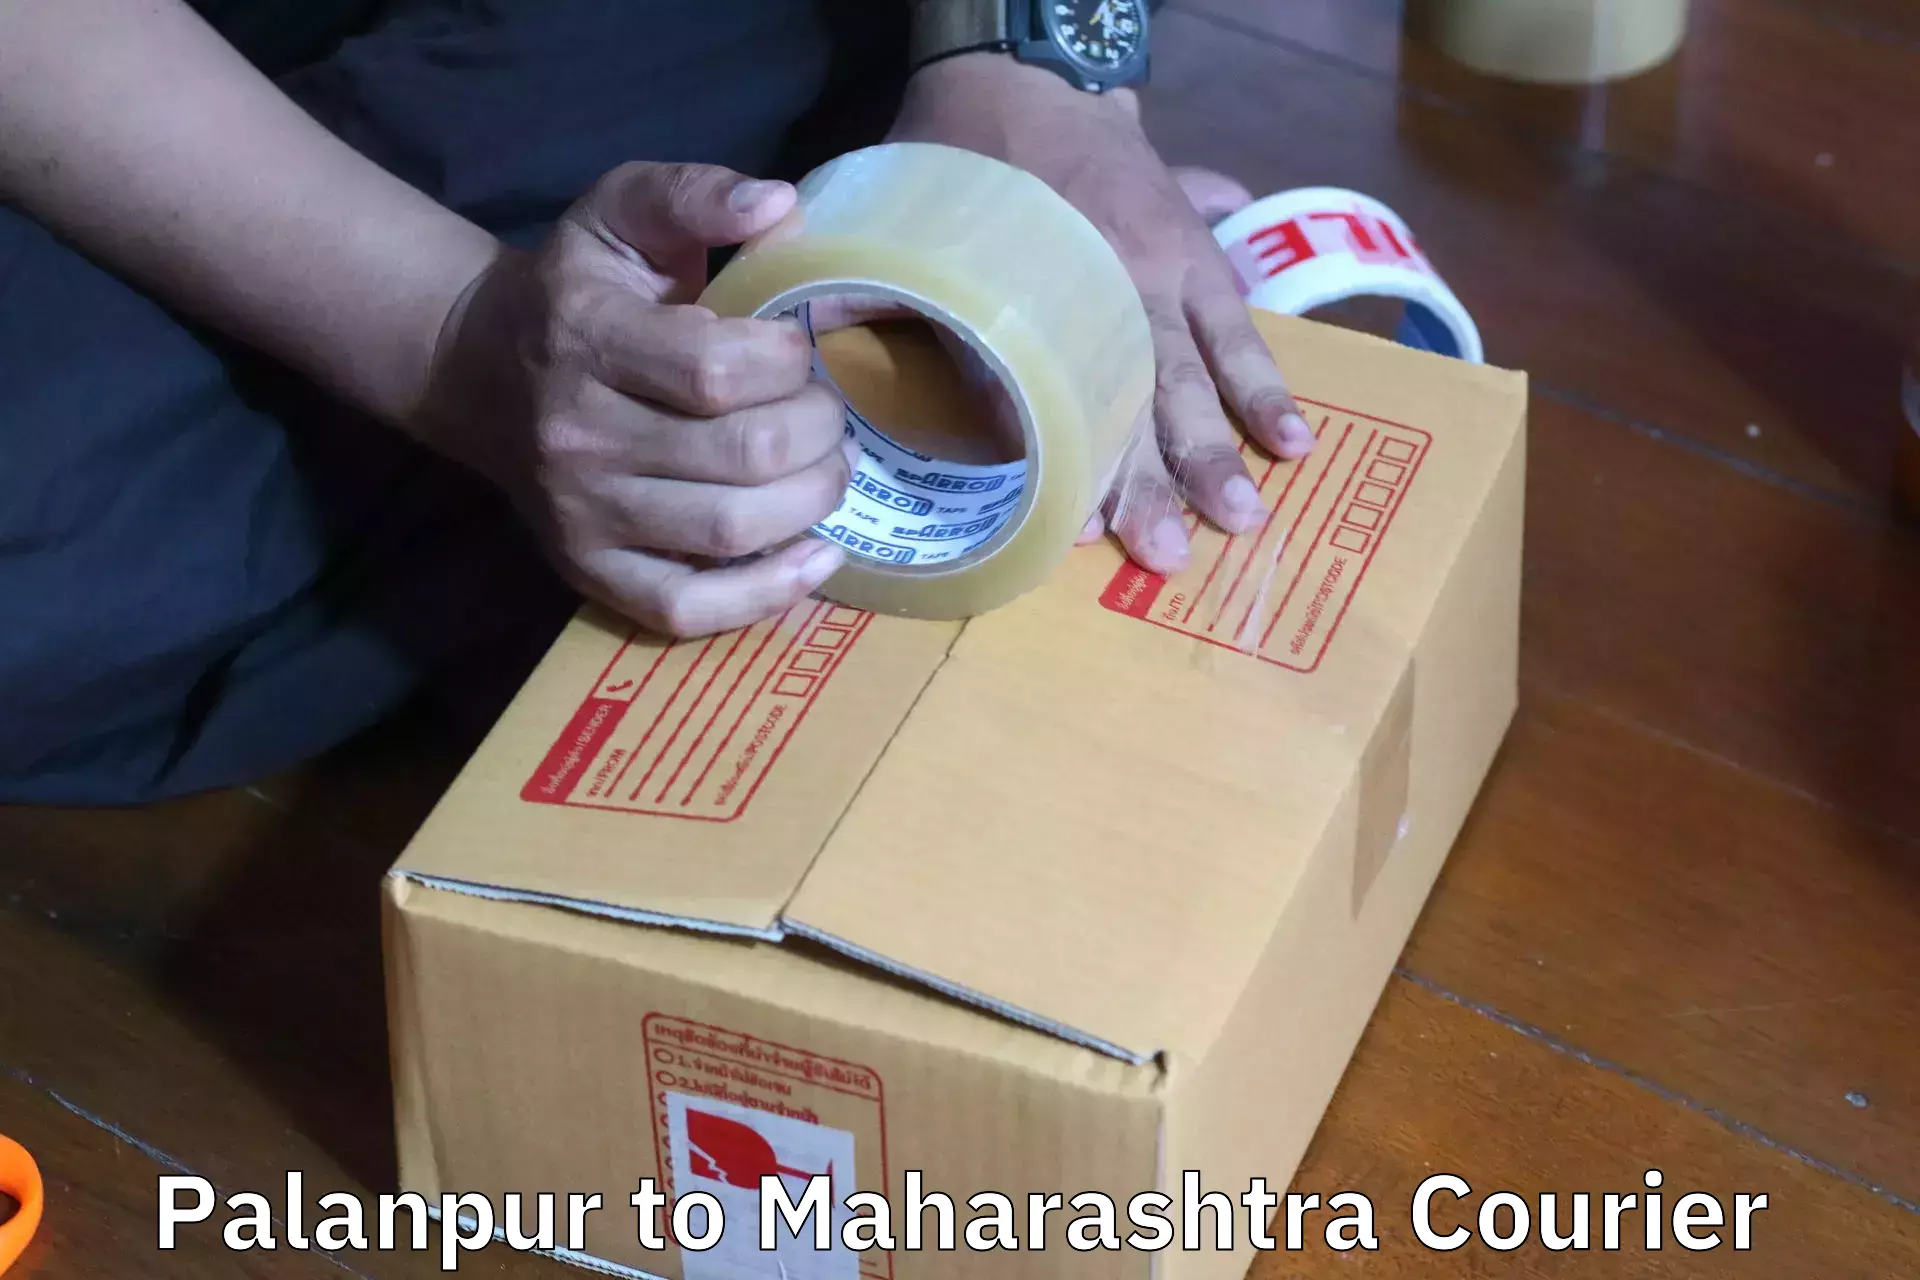 Professional movers and packers Palanpur to Maharashtra